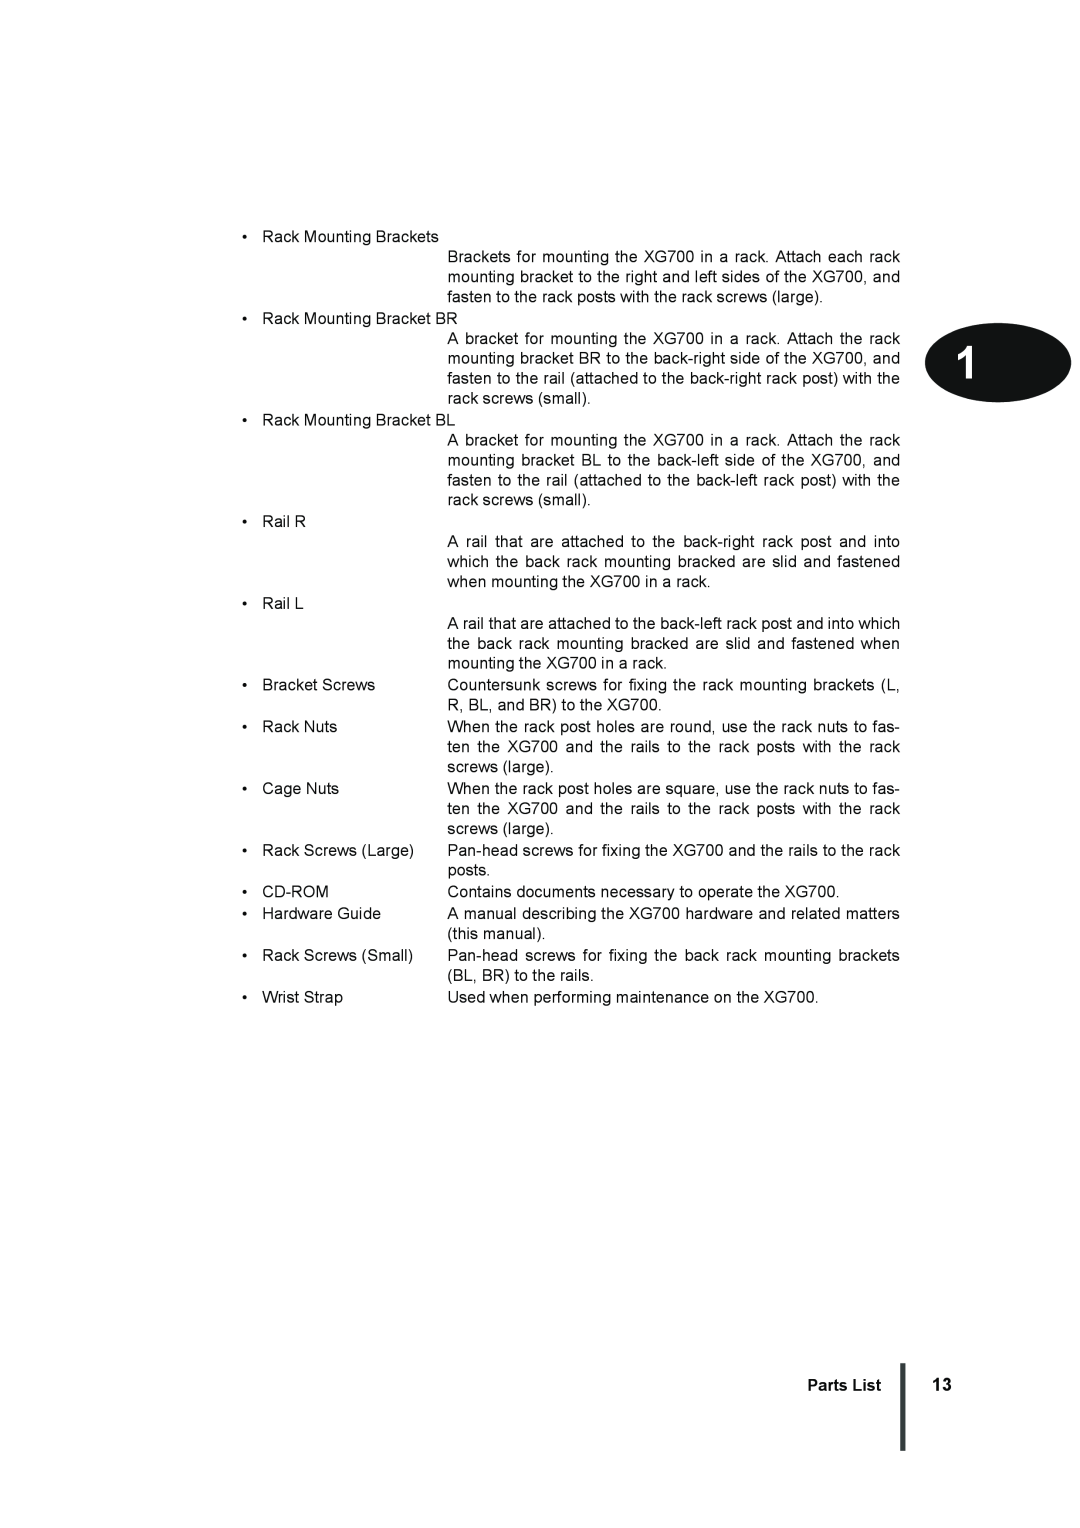 Fujitsu XG700 manual Parts List 